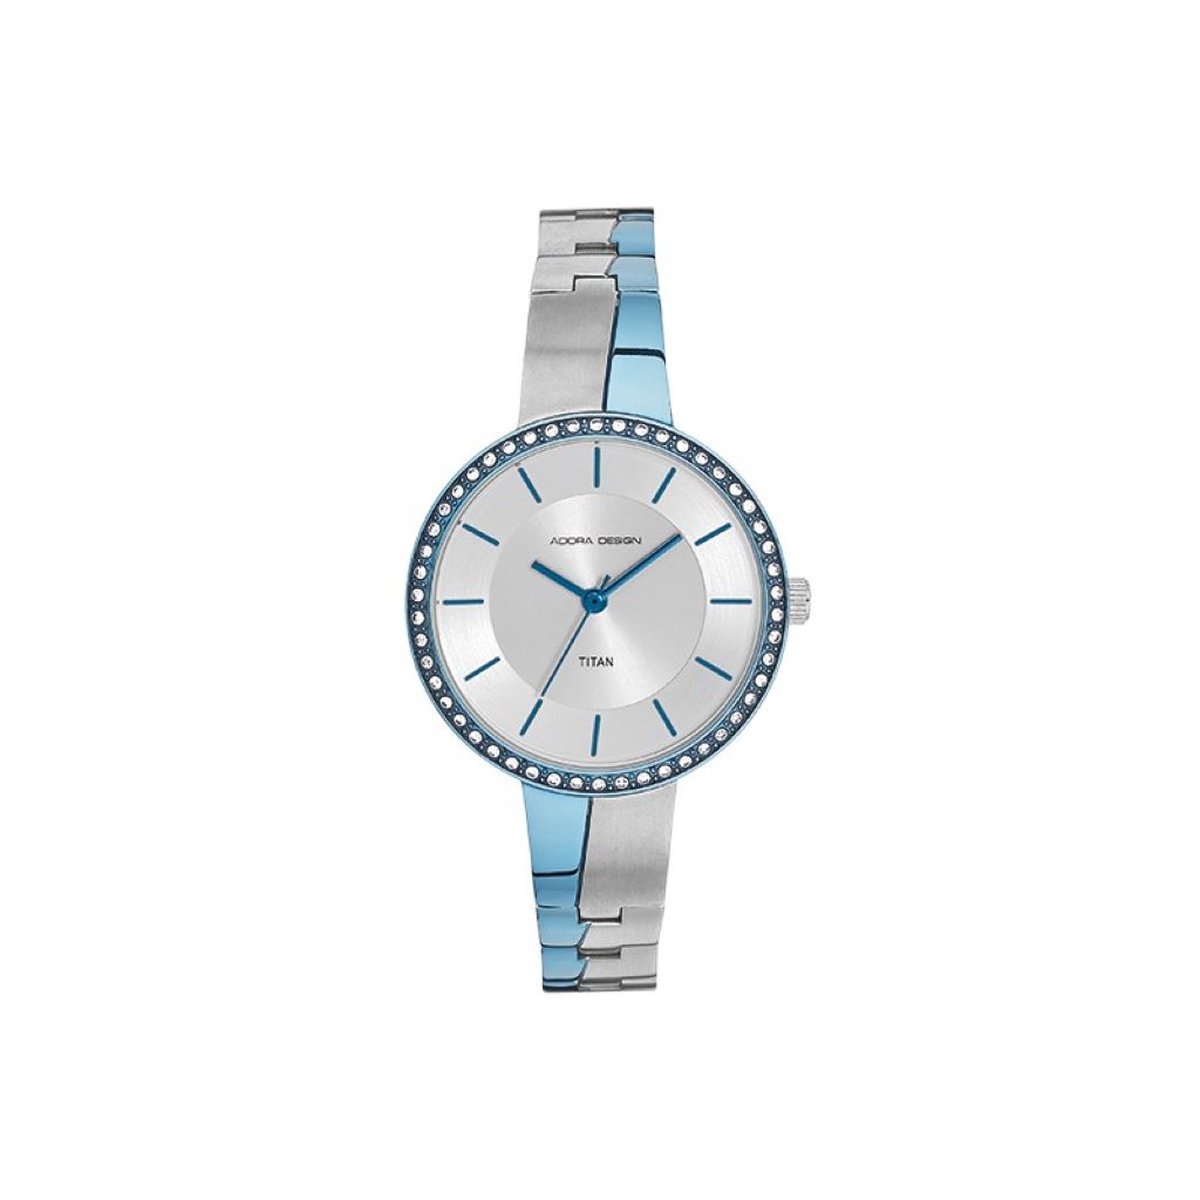 Adora Design dameshorloge Ø 32 mm titaniumblauw-zilverkleurig analoog quartz uurwerk